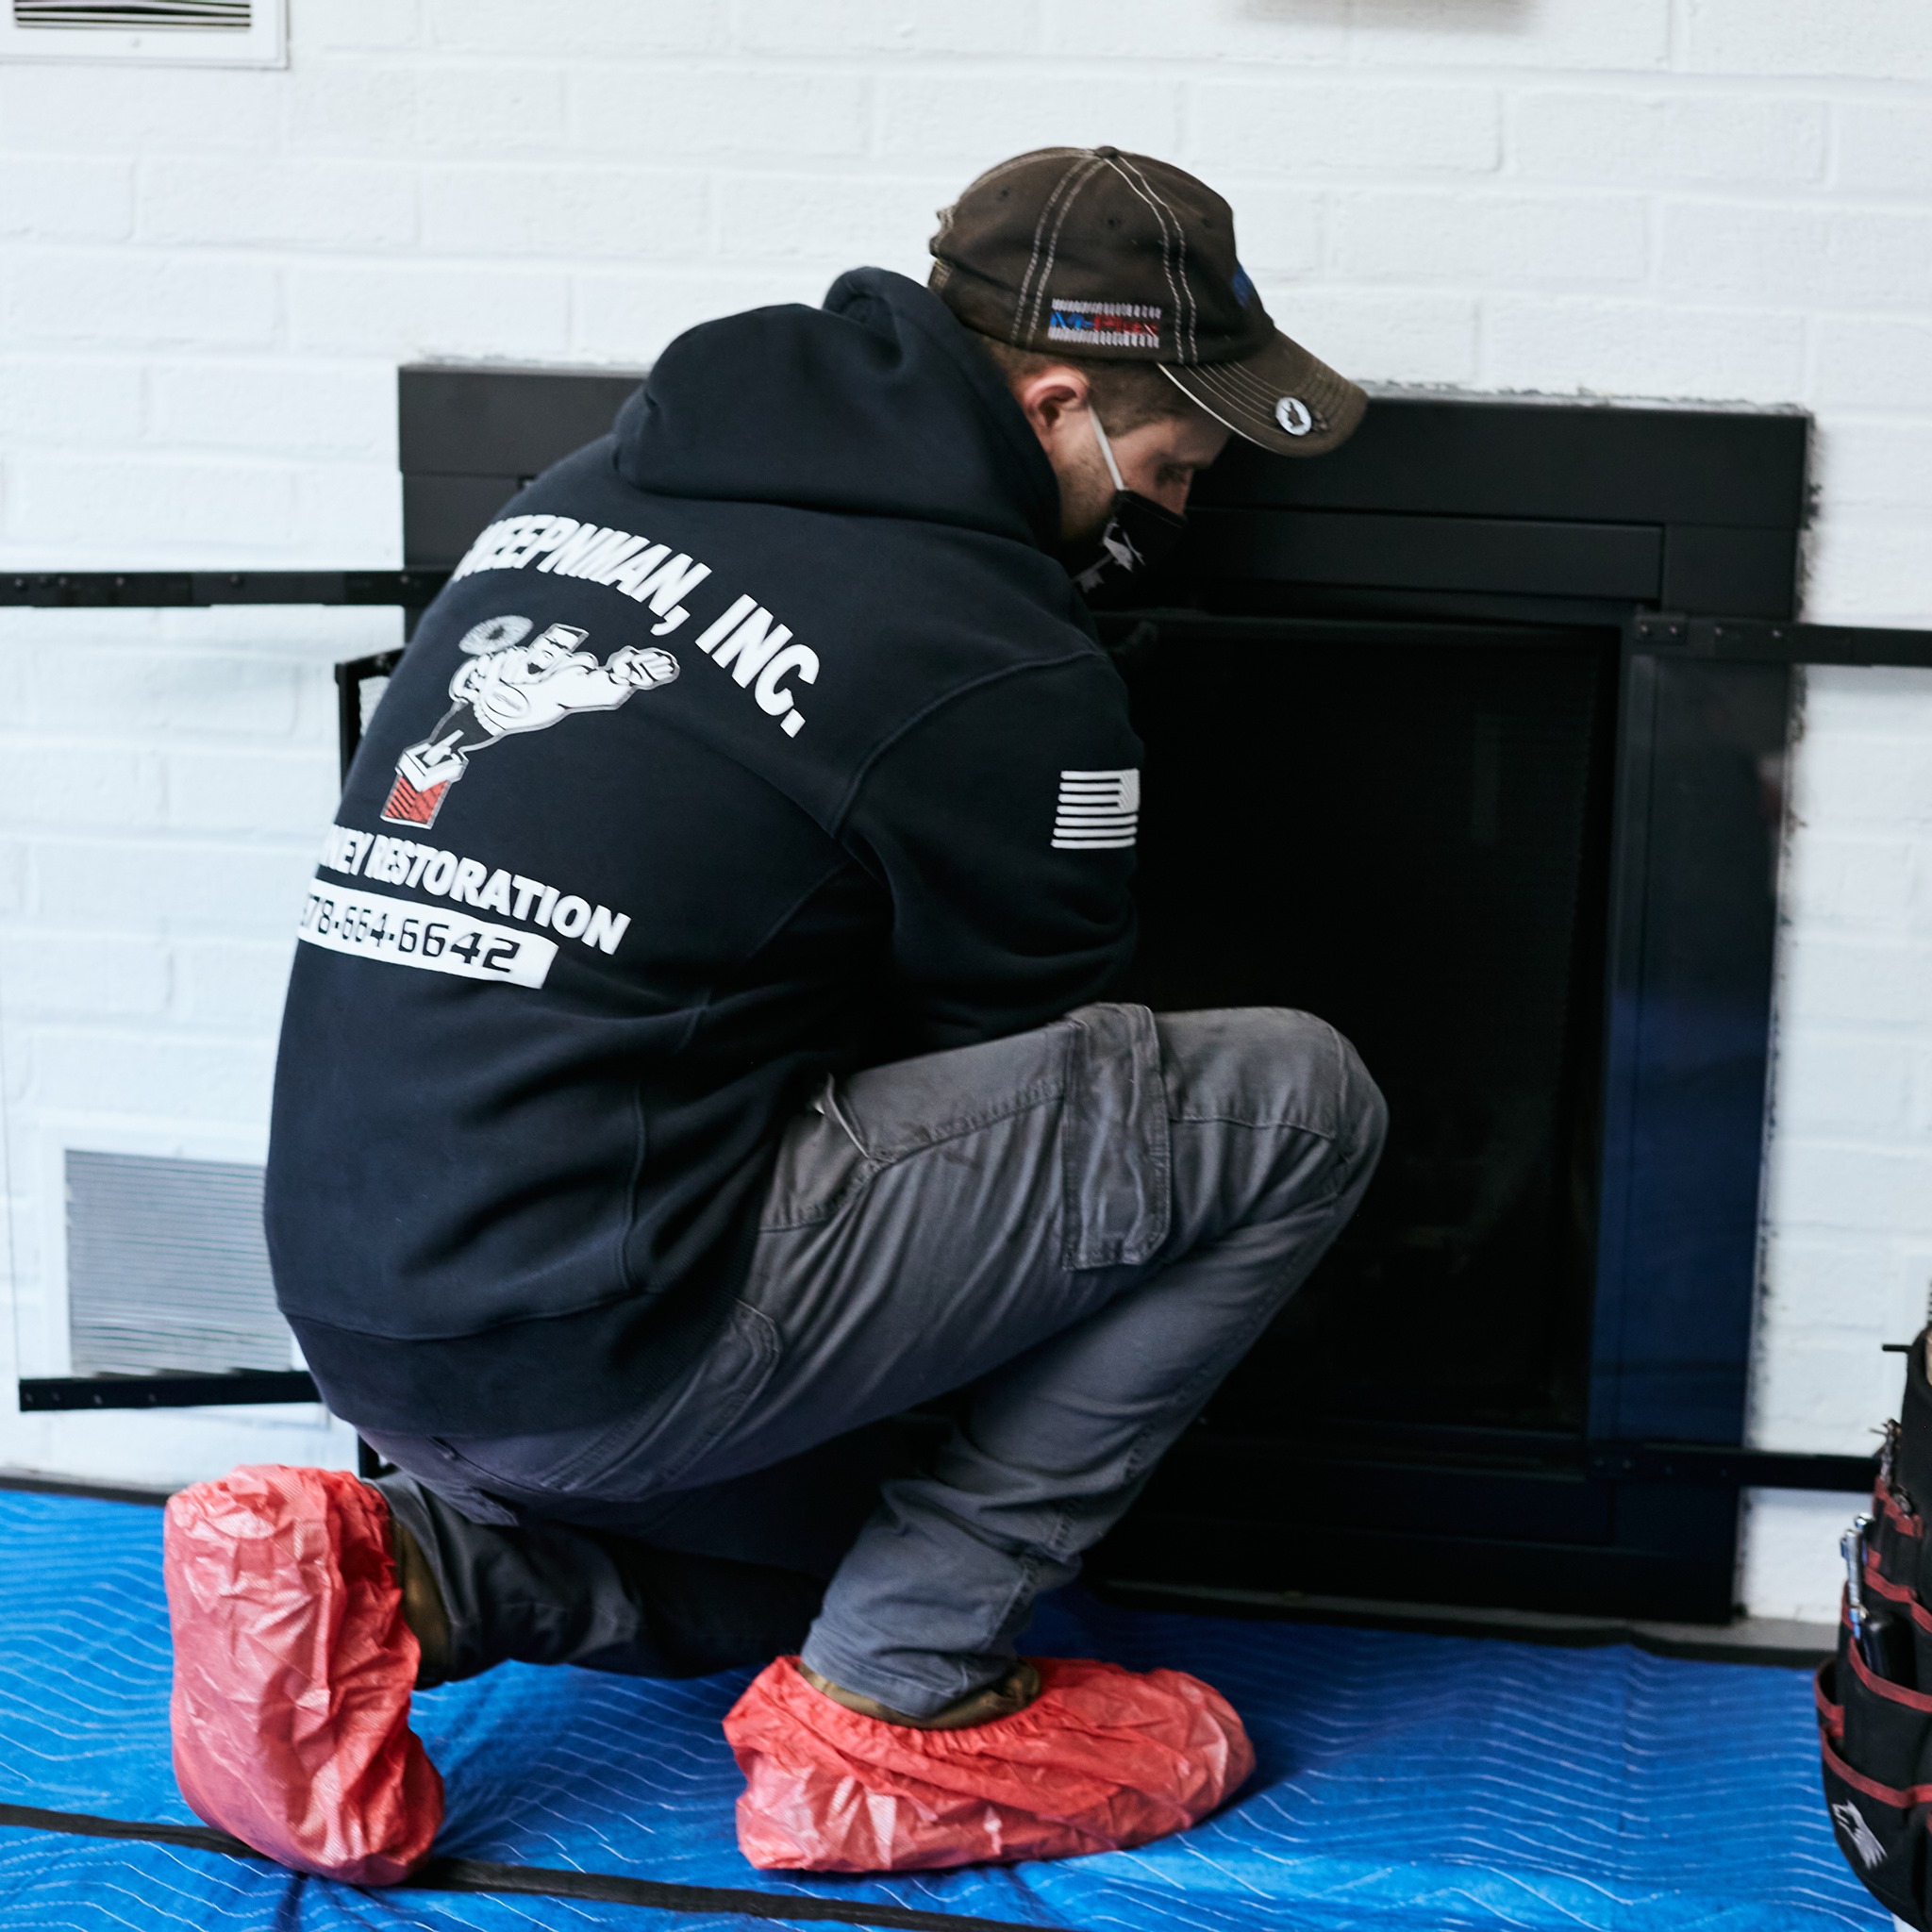 Technician inspecting fireplace